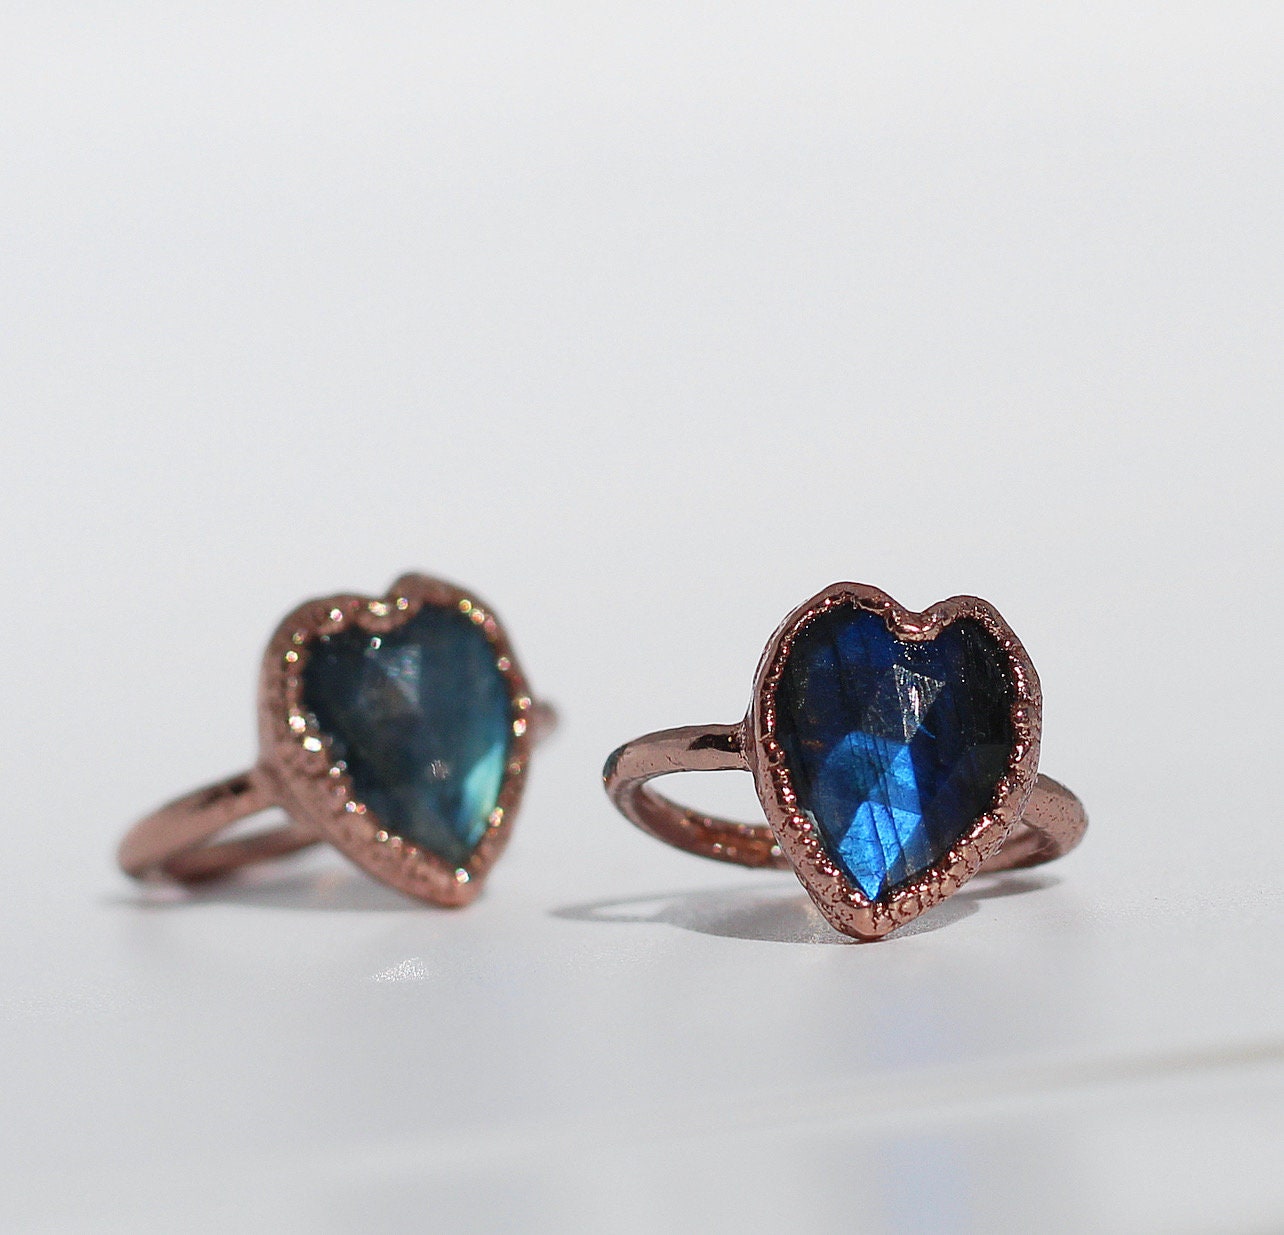 Labradorite Heart Ring, Blue Labradorite Ring, Labradorite Ring Heart, Labradorite Ring Witchy, Labradorite Ring for Women, Heart Jewelry